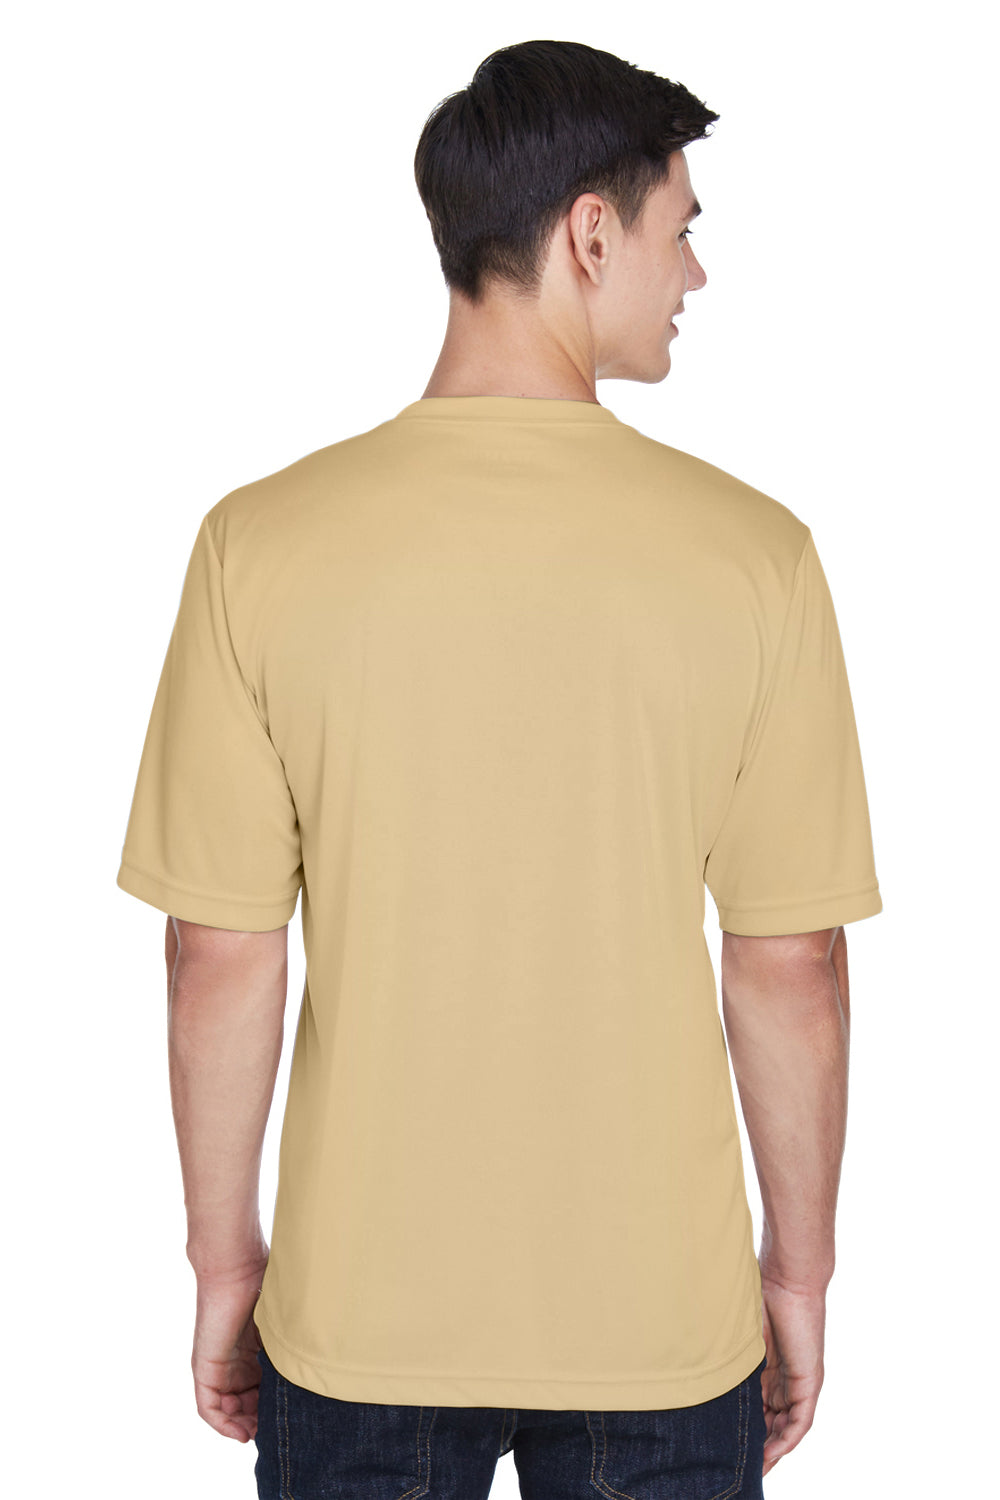 Team 365 TT11 Mens Zone Performance Moisture Wicking Short Sleeve Crewneck T-Shirt Vegas Gold Back